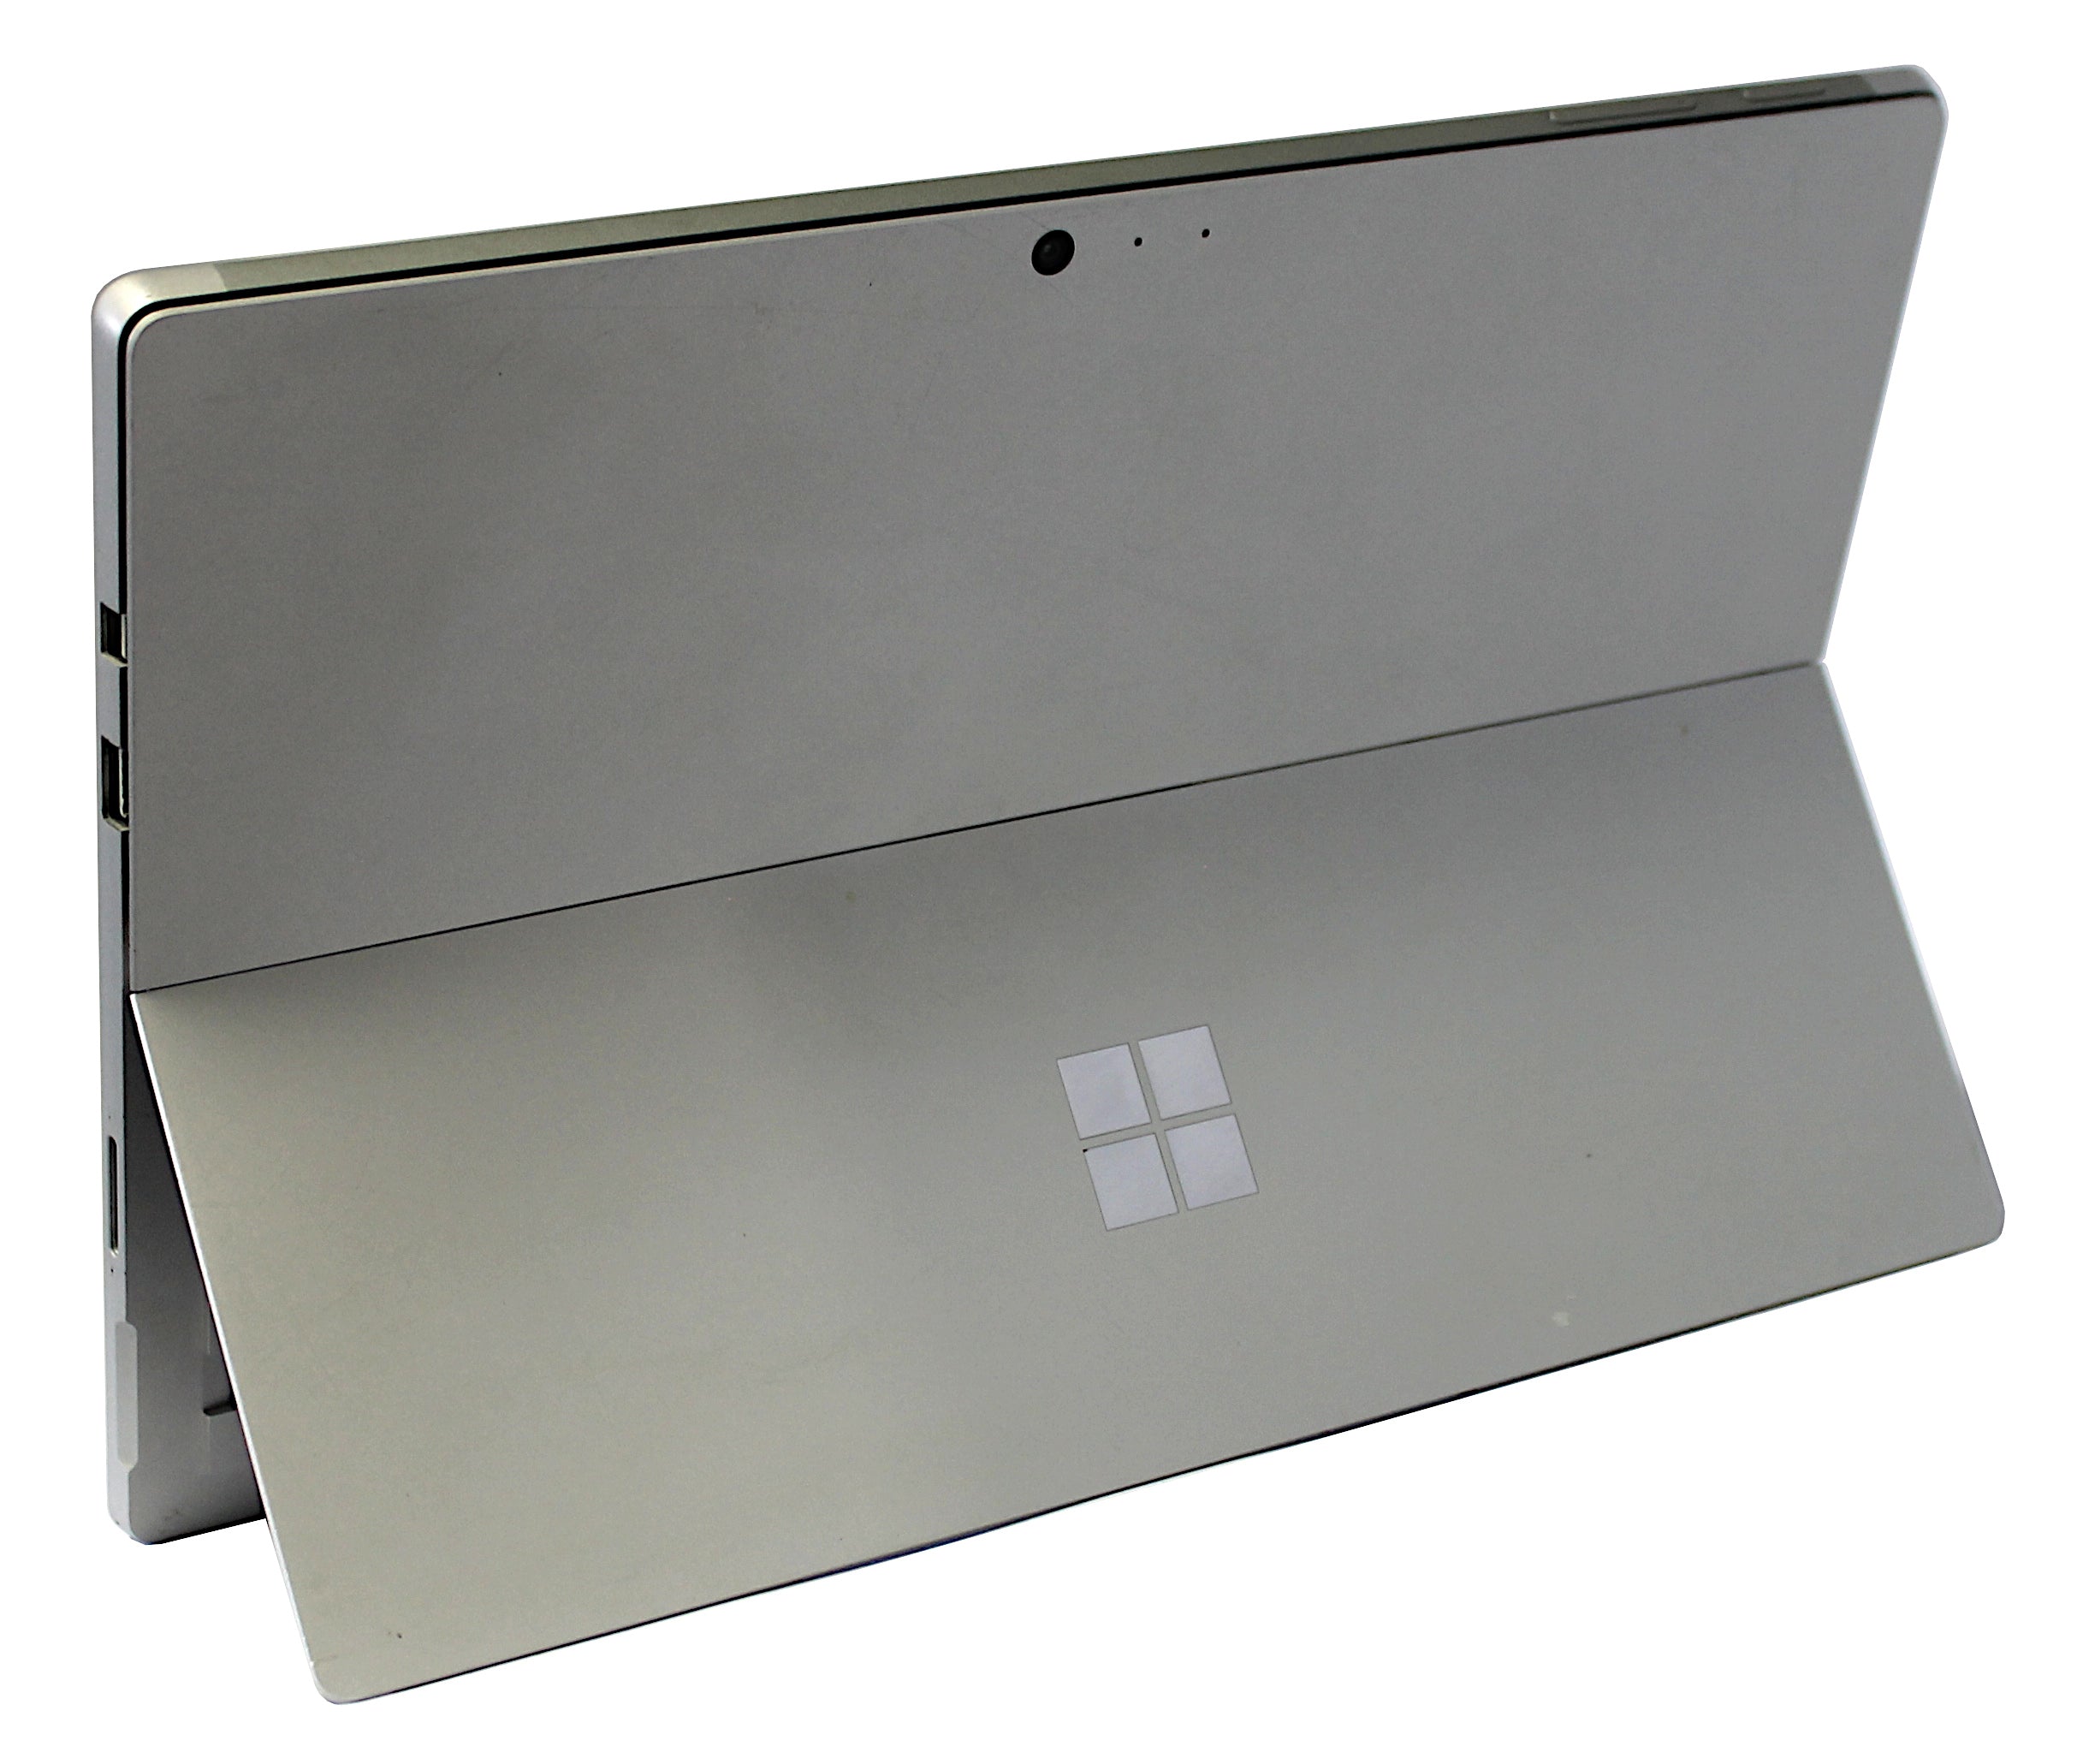 Microsoft Surface Pro 5 Tablet, Core i5 7th Gen, 4GB RAM, 128GB eMMC, Windows 10